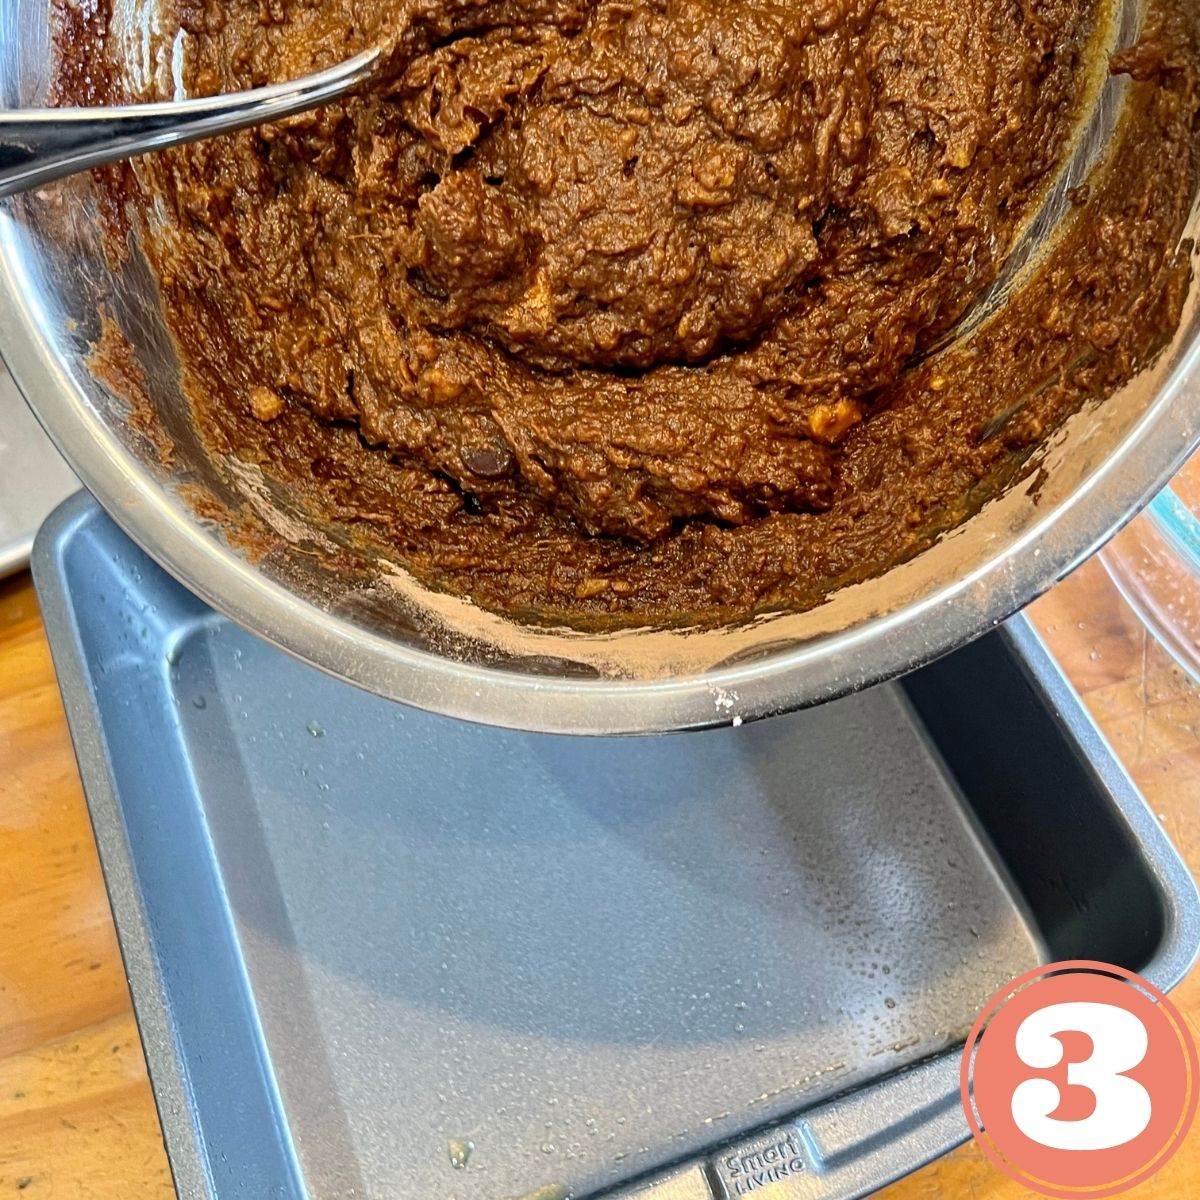 Pouring vegan brownie batter into a baking pan